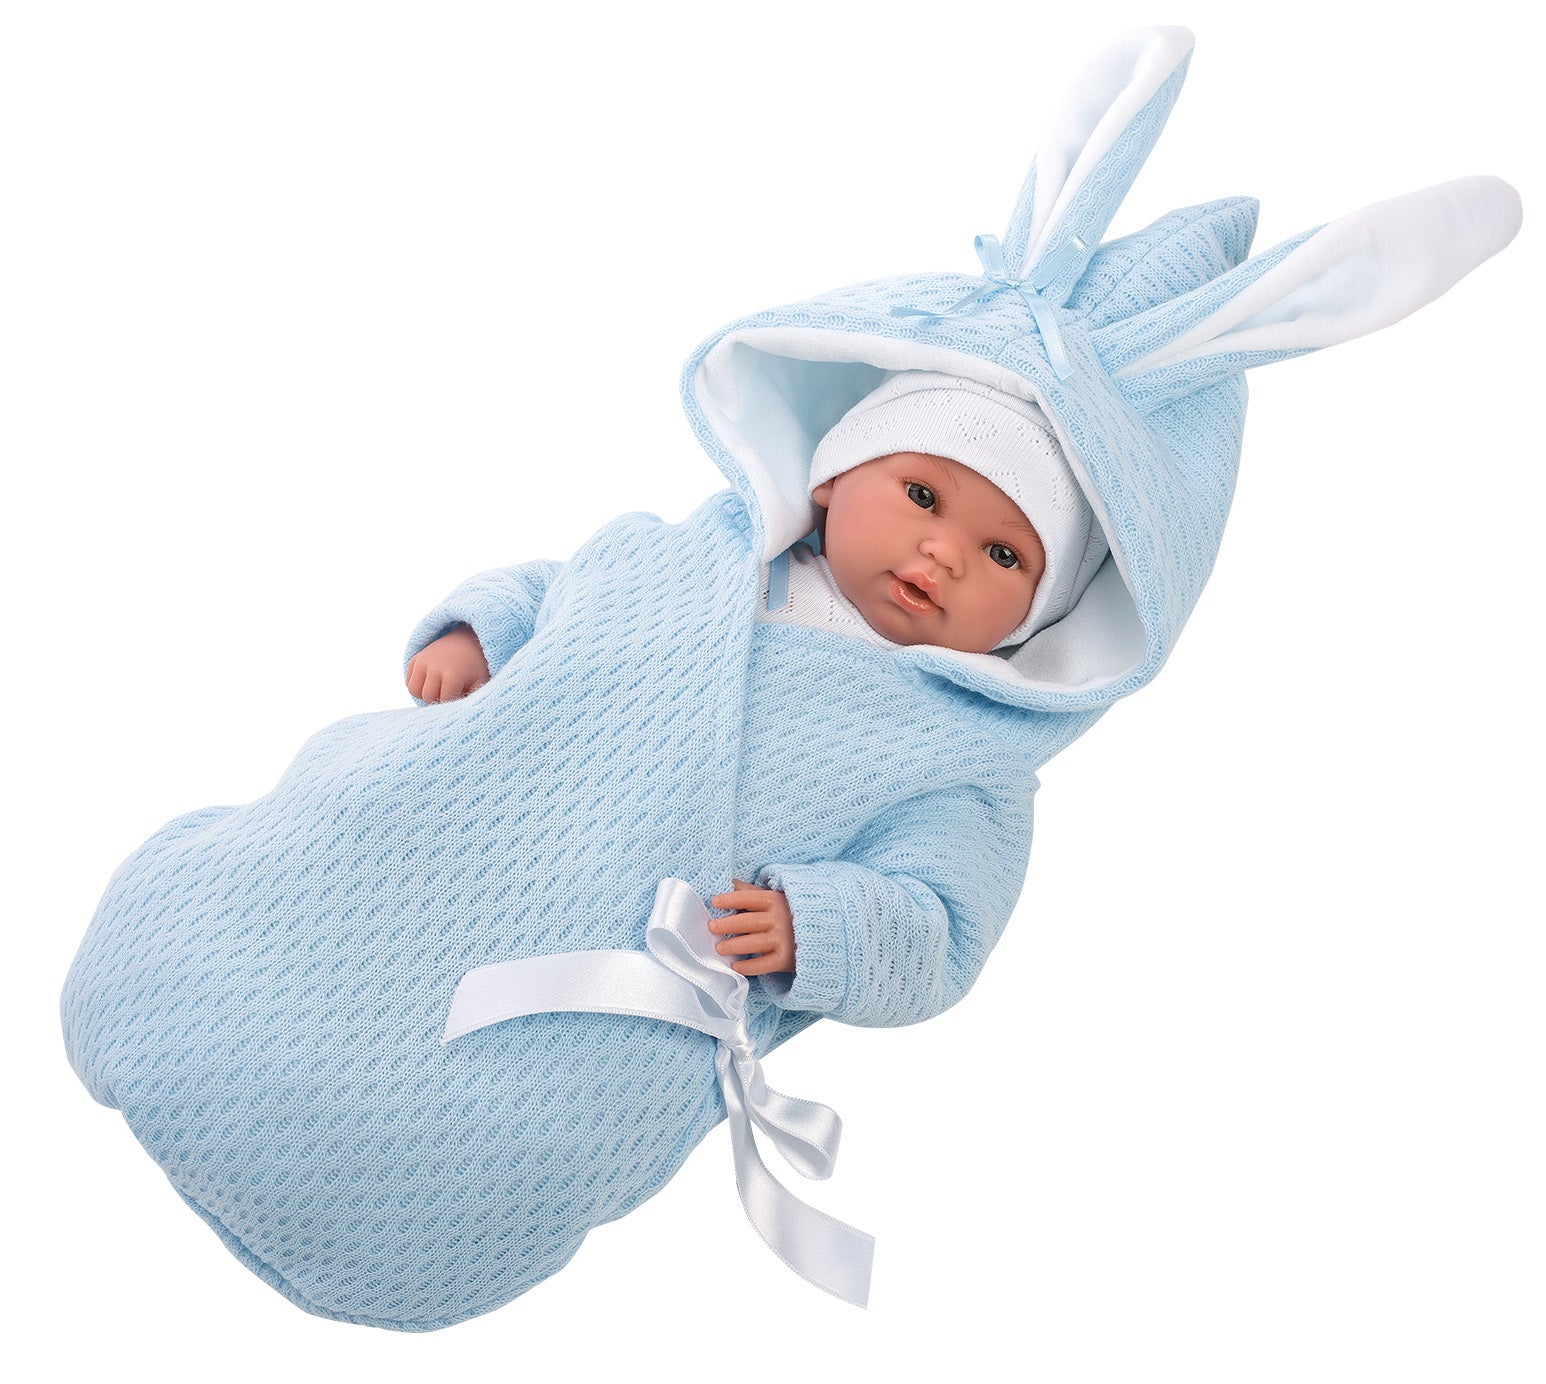 Llorens 14" Soft Body Newborn Doll Aaron with Hooded Bunny Jacket Dolls